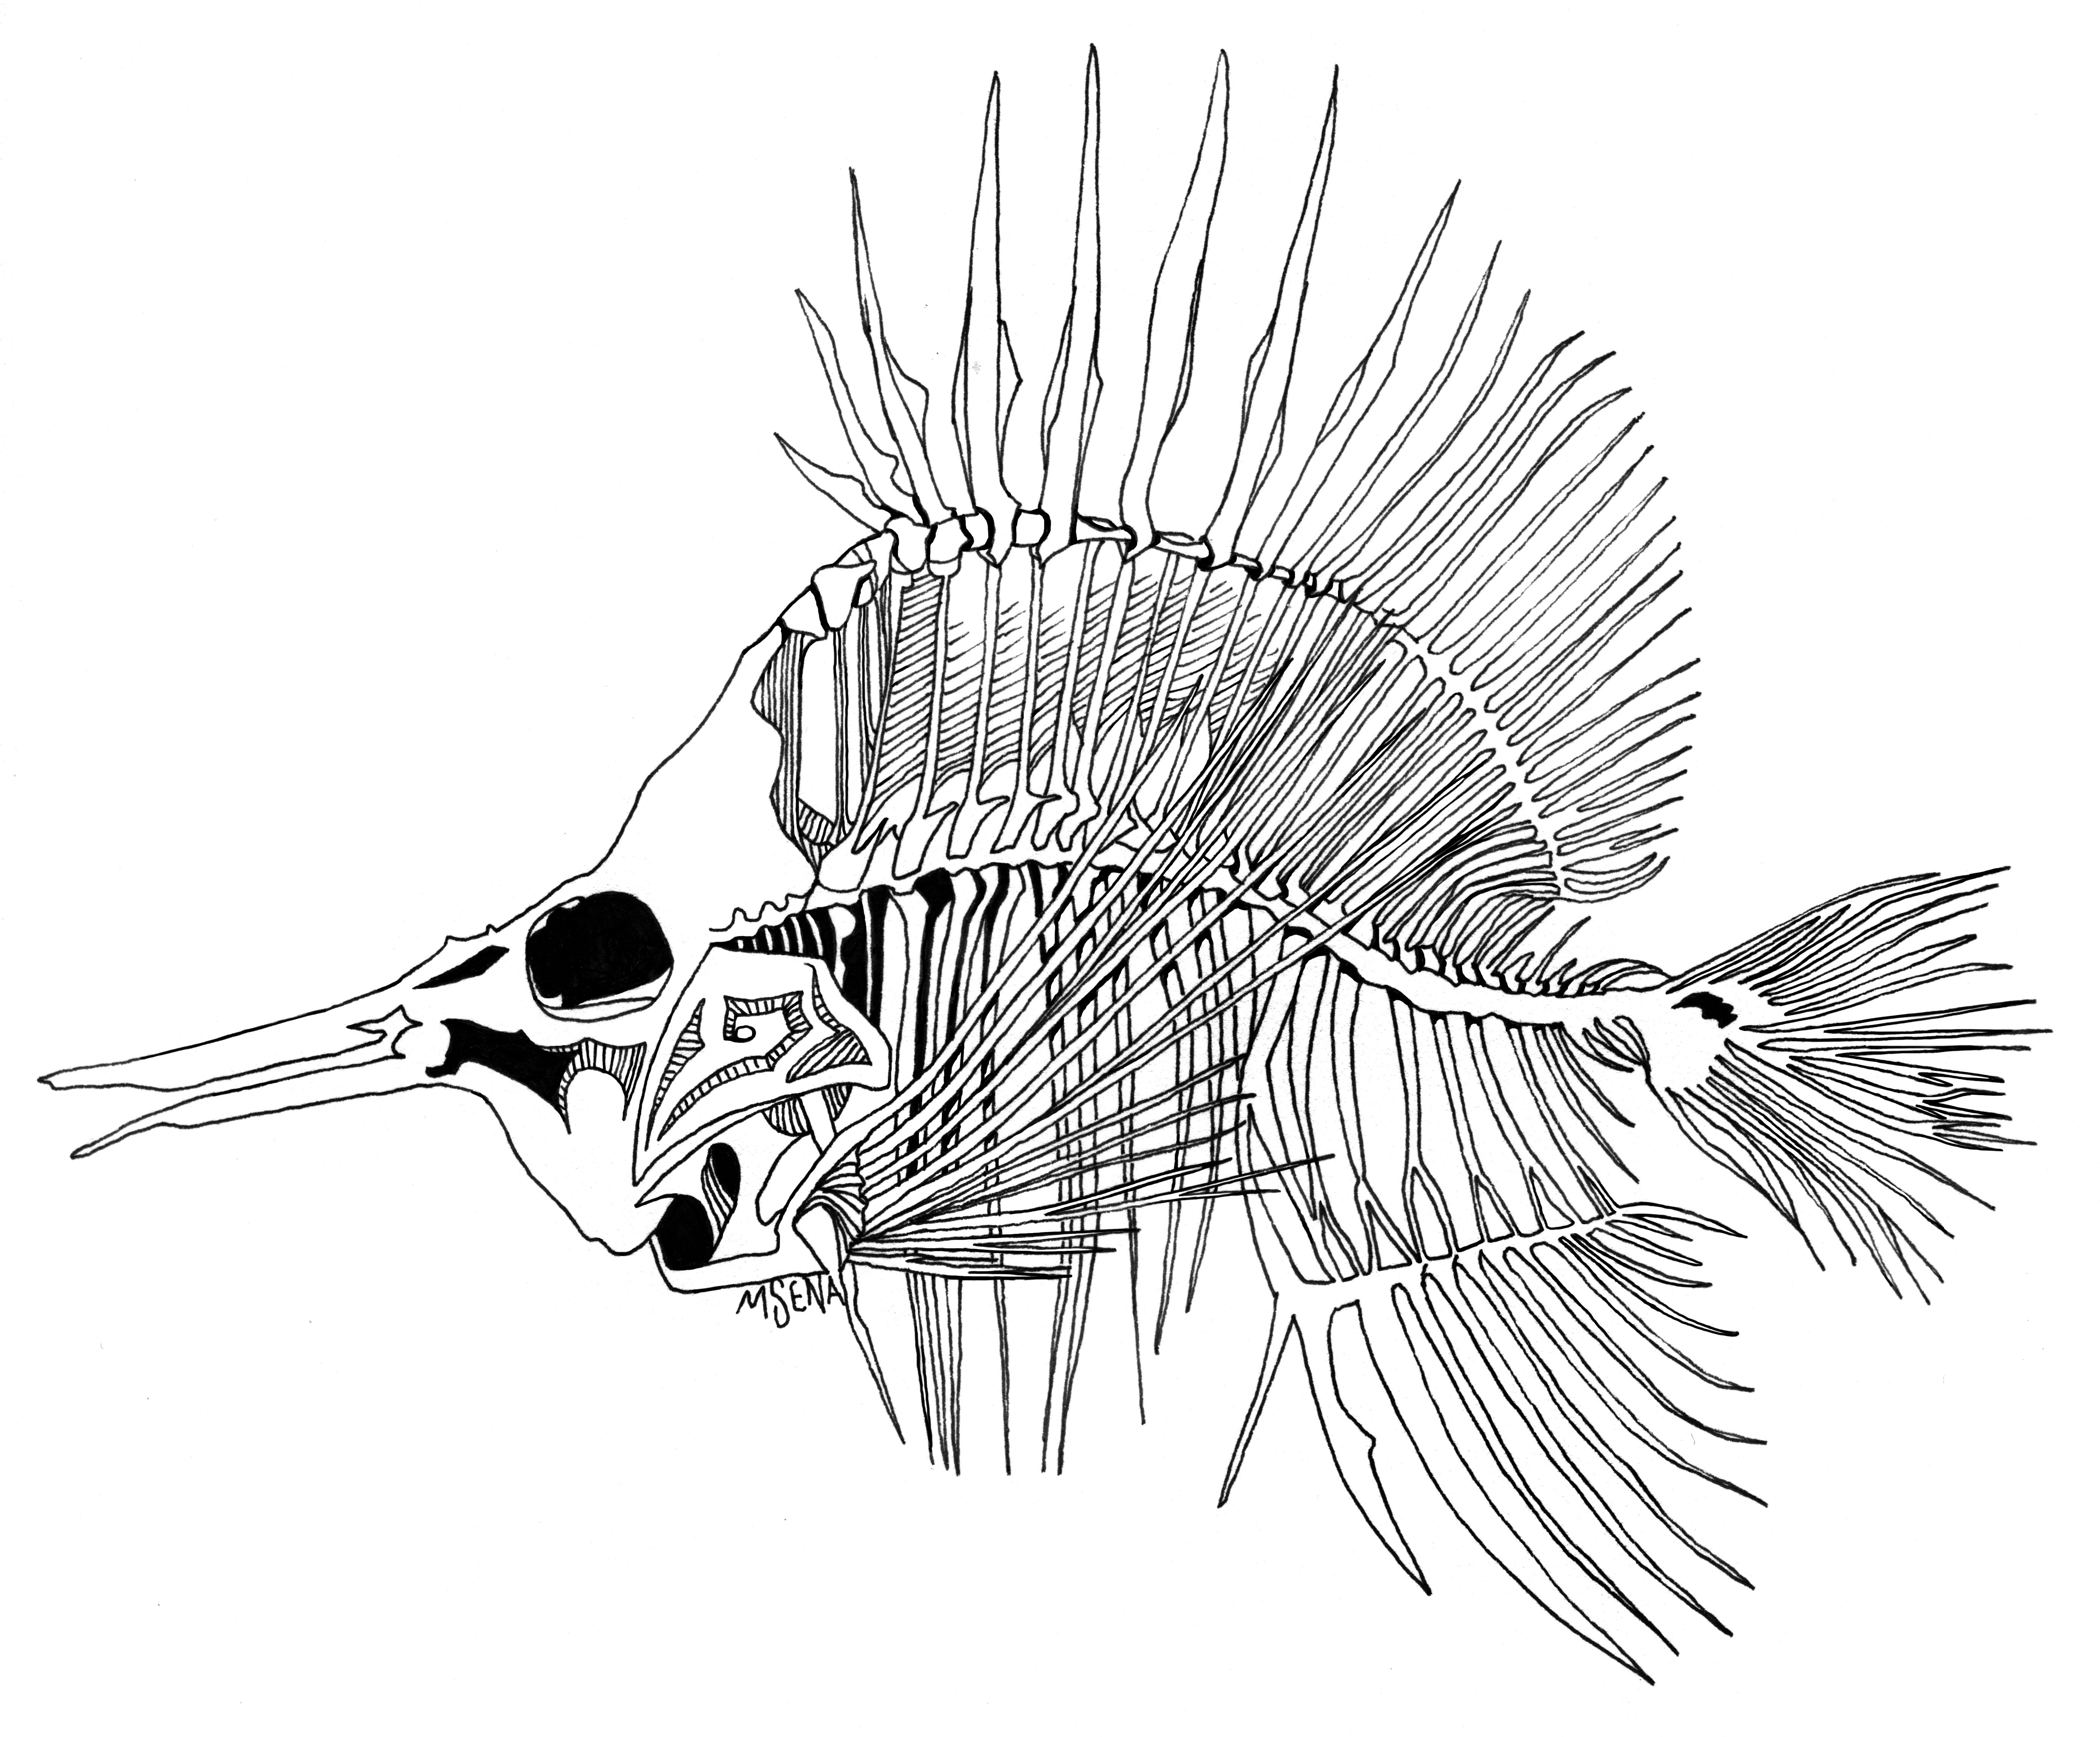 Doodle of fish skeleton